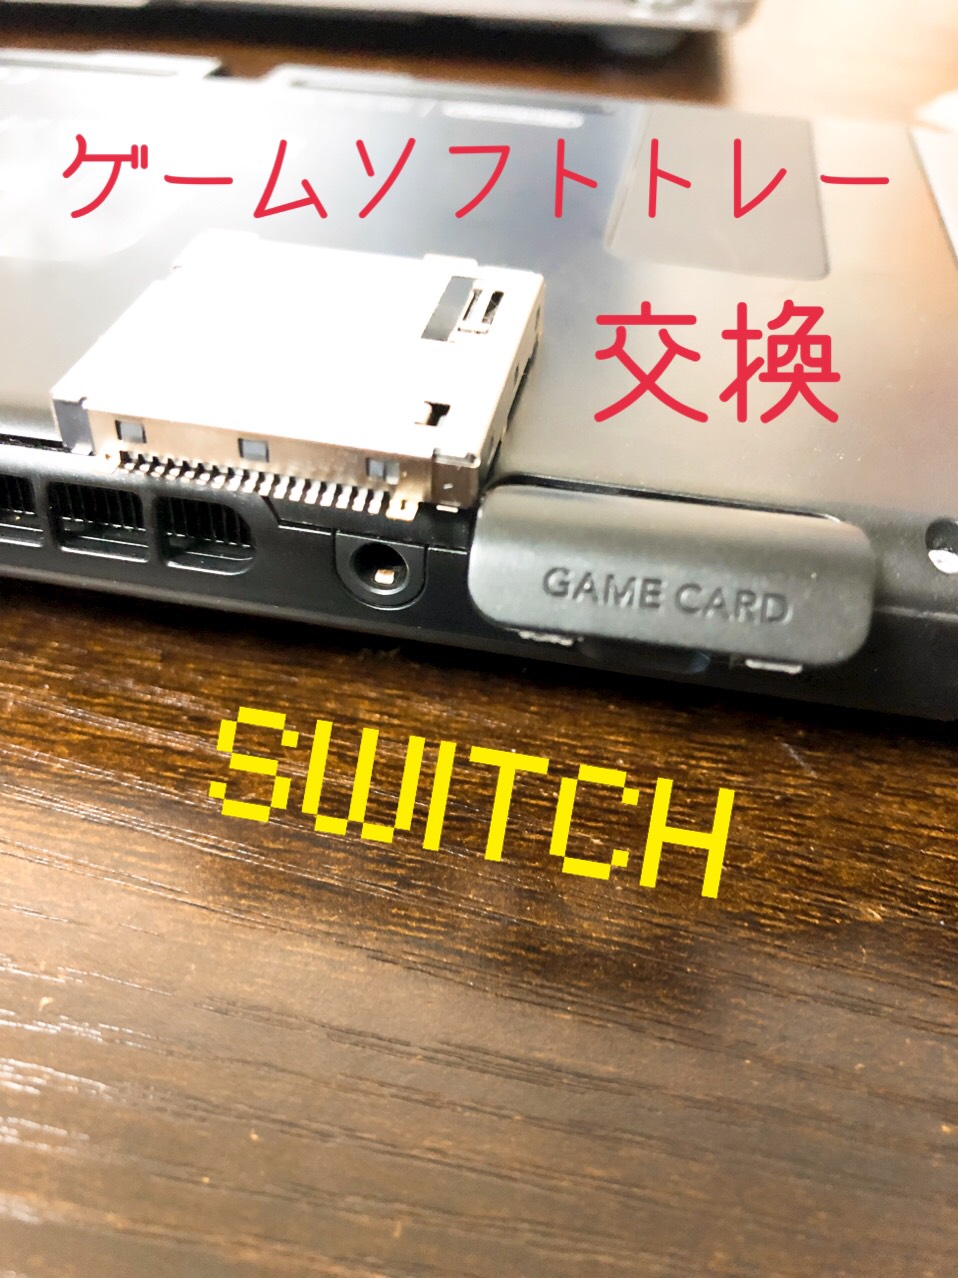 Nintendo Switch ゲームソフトが読み込まない時の修理方法 Switch Nintendo3ds Psp 修理のゲームホスピタル Switch Nintendo3ds ニンテンドーds Psp 修理